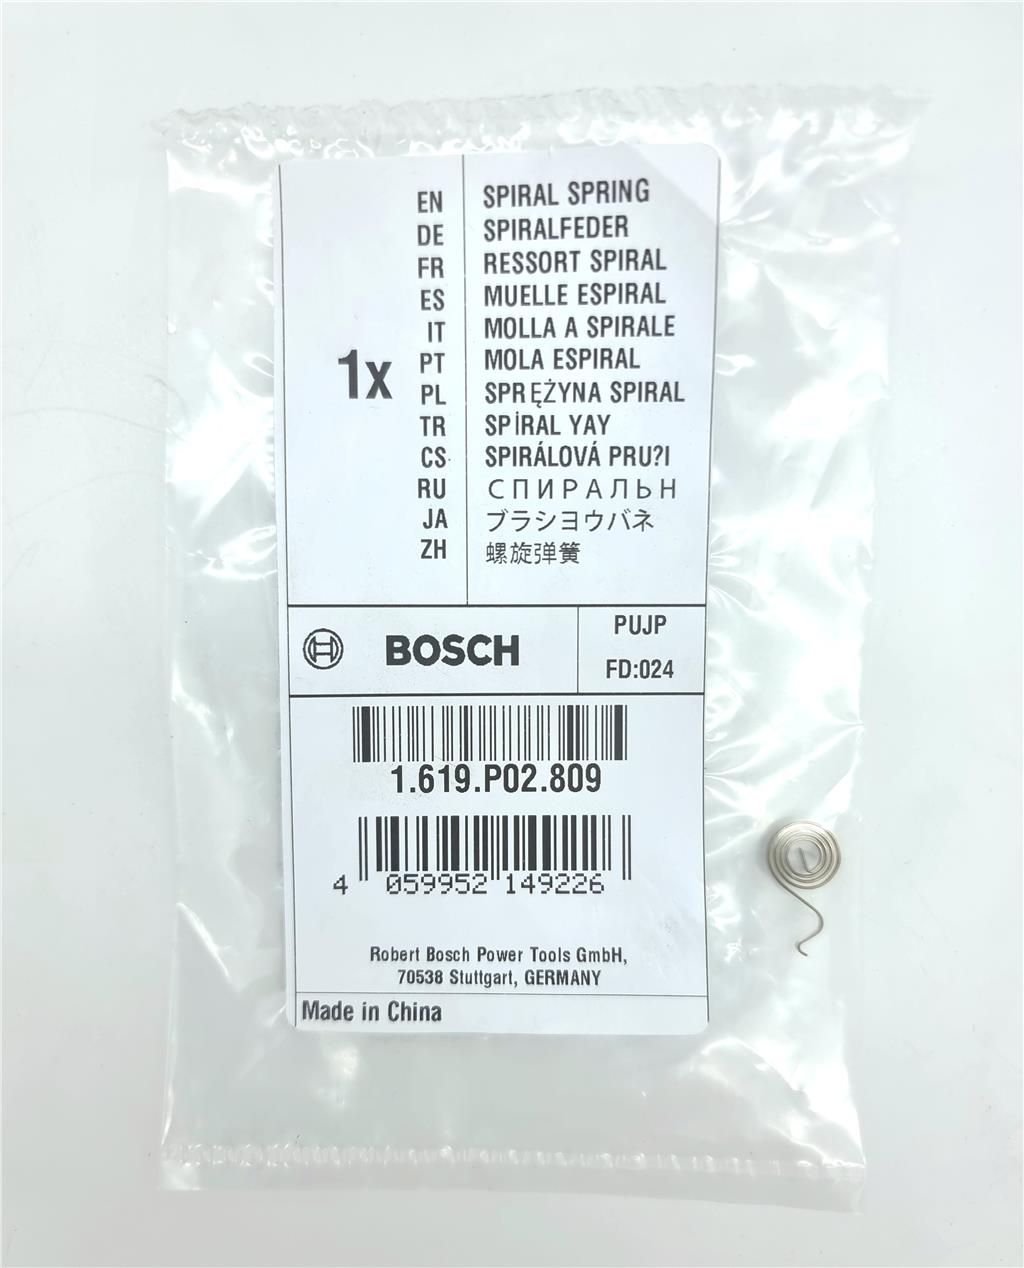 GENUINE Bosch Carbon Brush Spiral Spring GWS 7-115 GWS 720 GEF 7 E GOP 250 CE